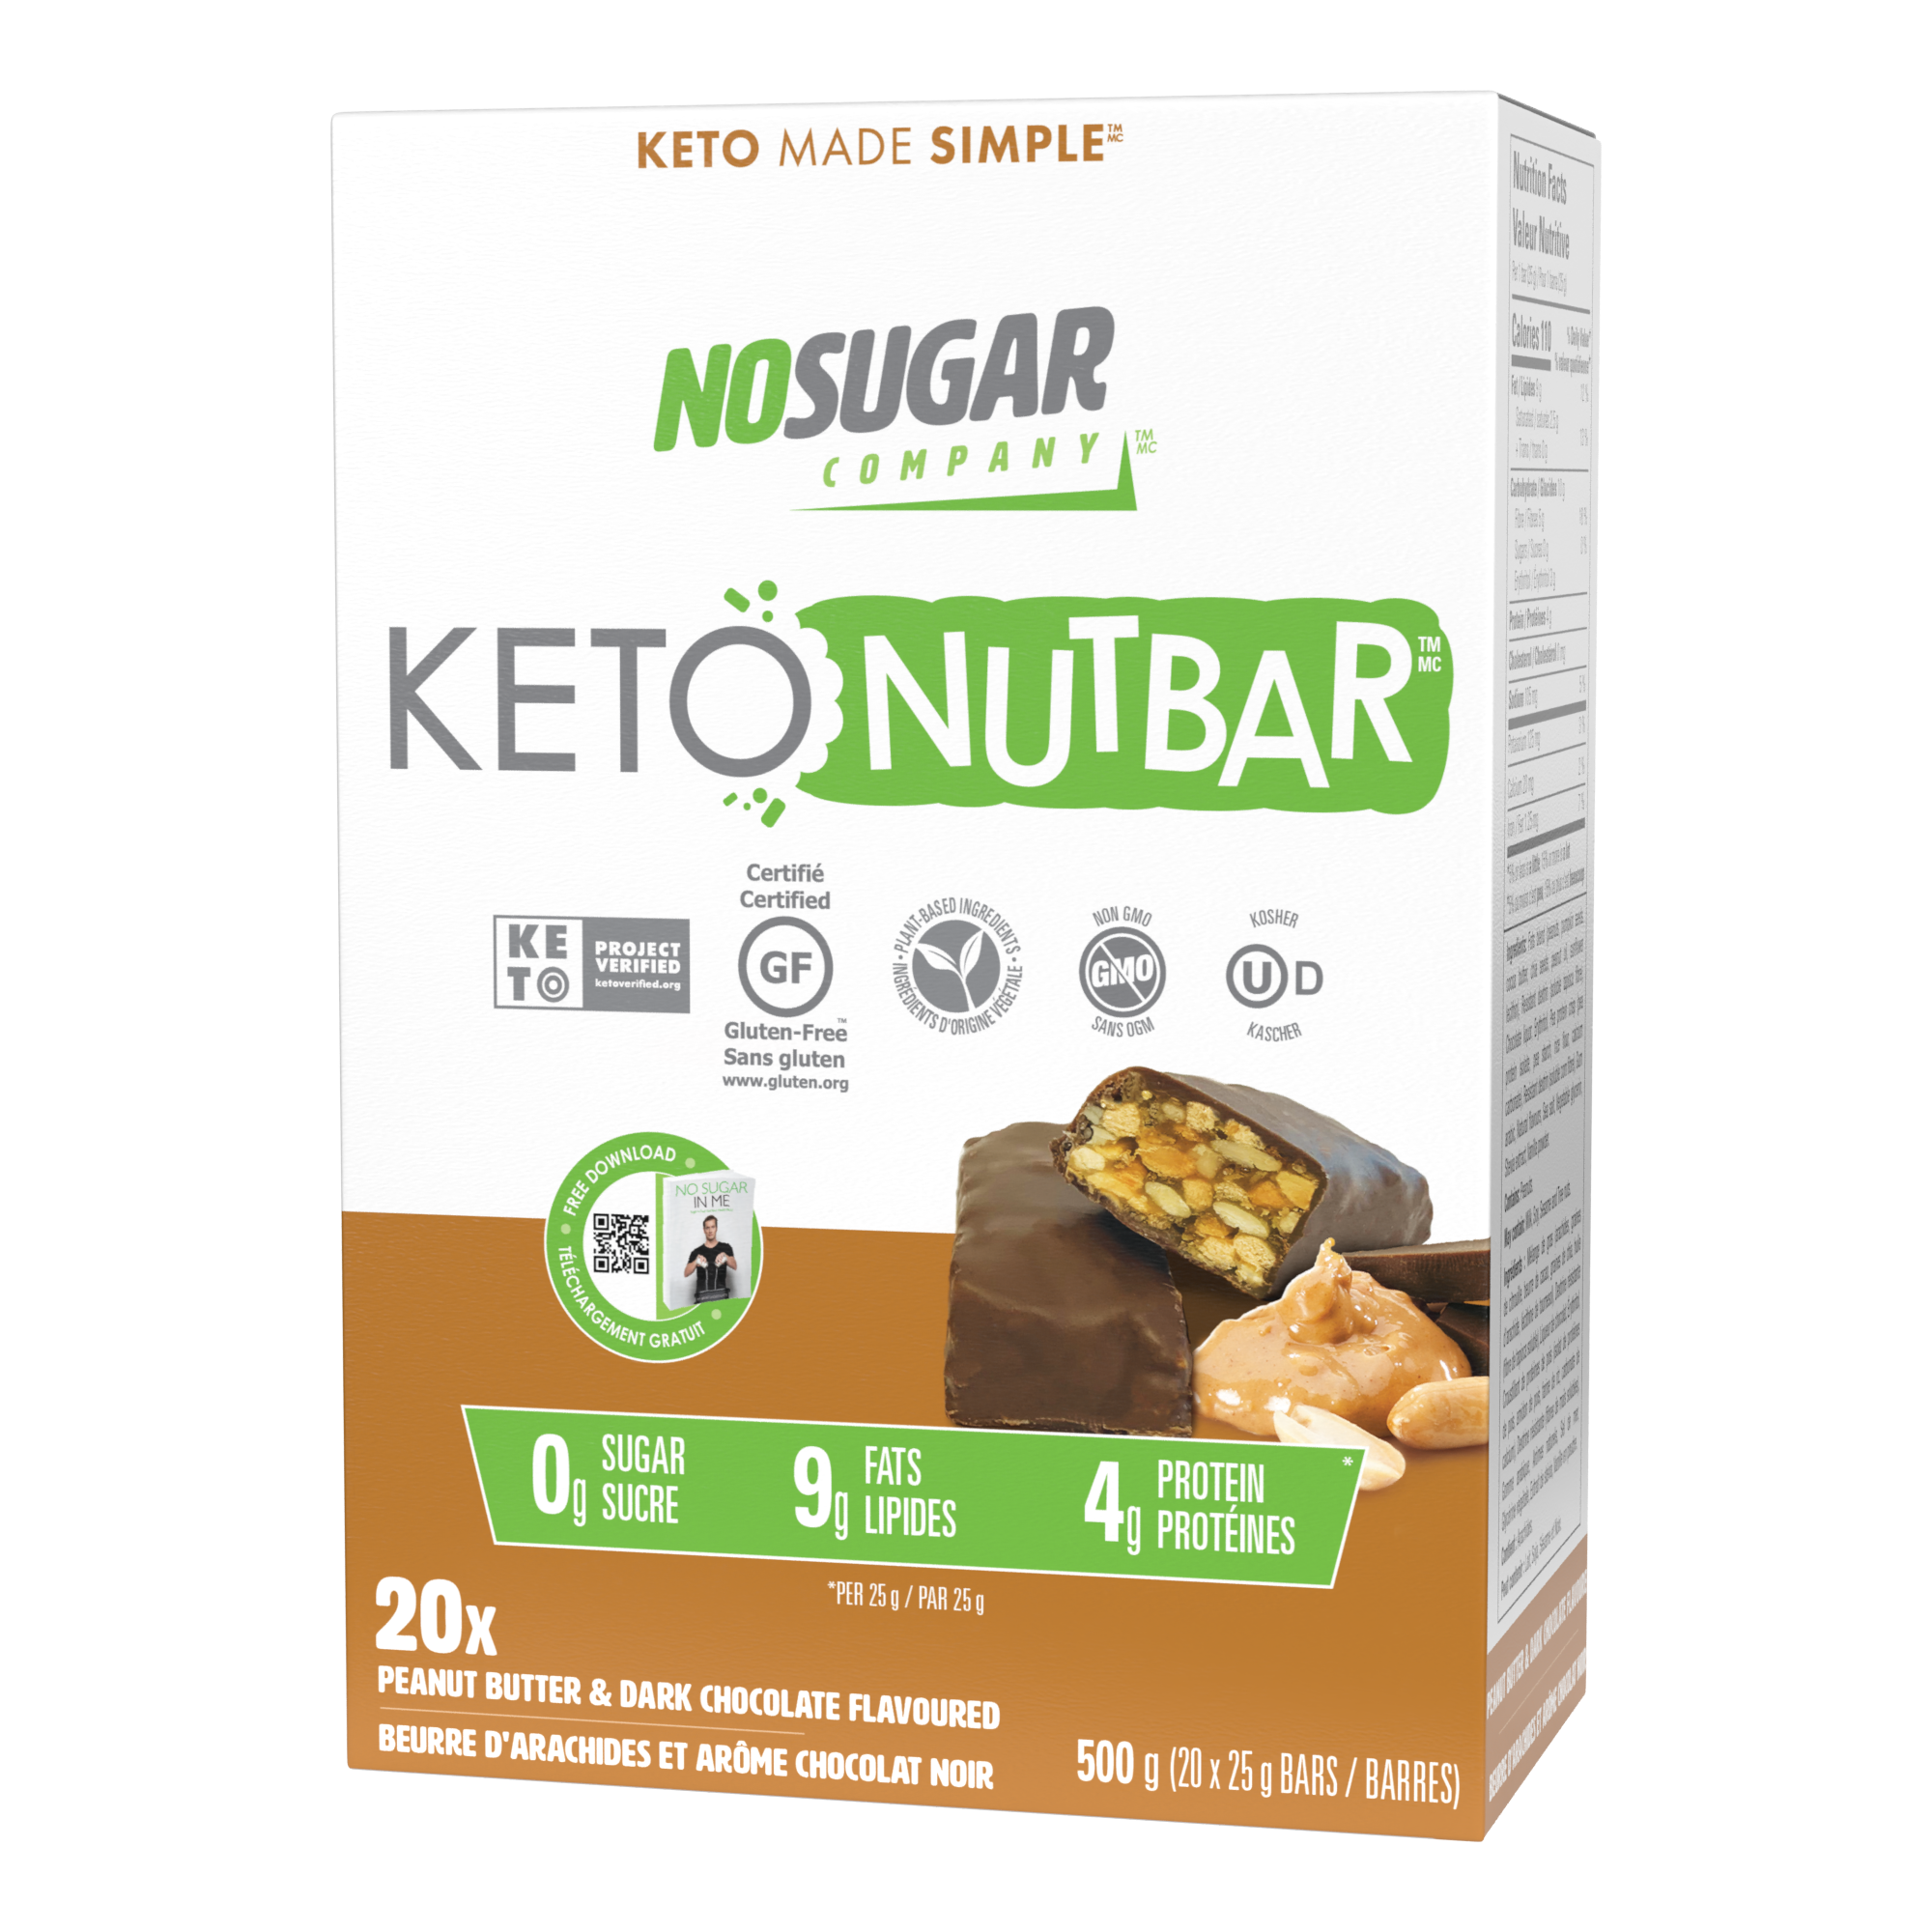 No Sugar Keto Nutbar Peanut Butter and Dark Chocolate - 20 Nutbars, 25g (0.88oz) per Nutbar